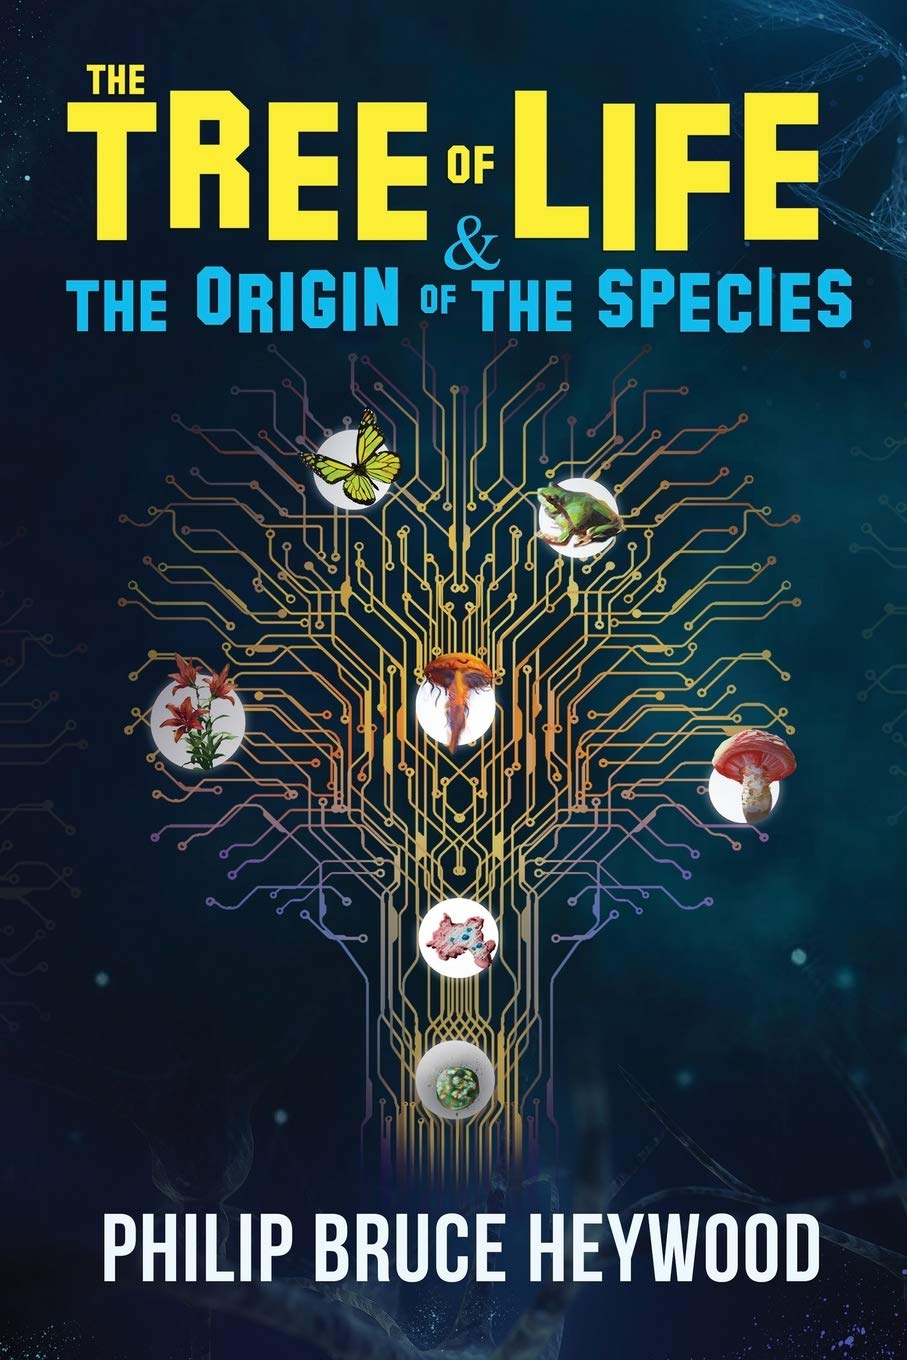 The Tree of Life & Origin of Species